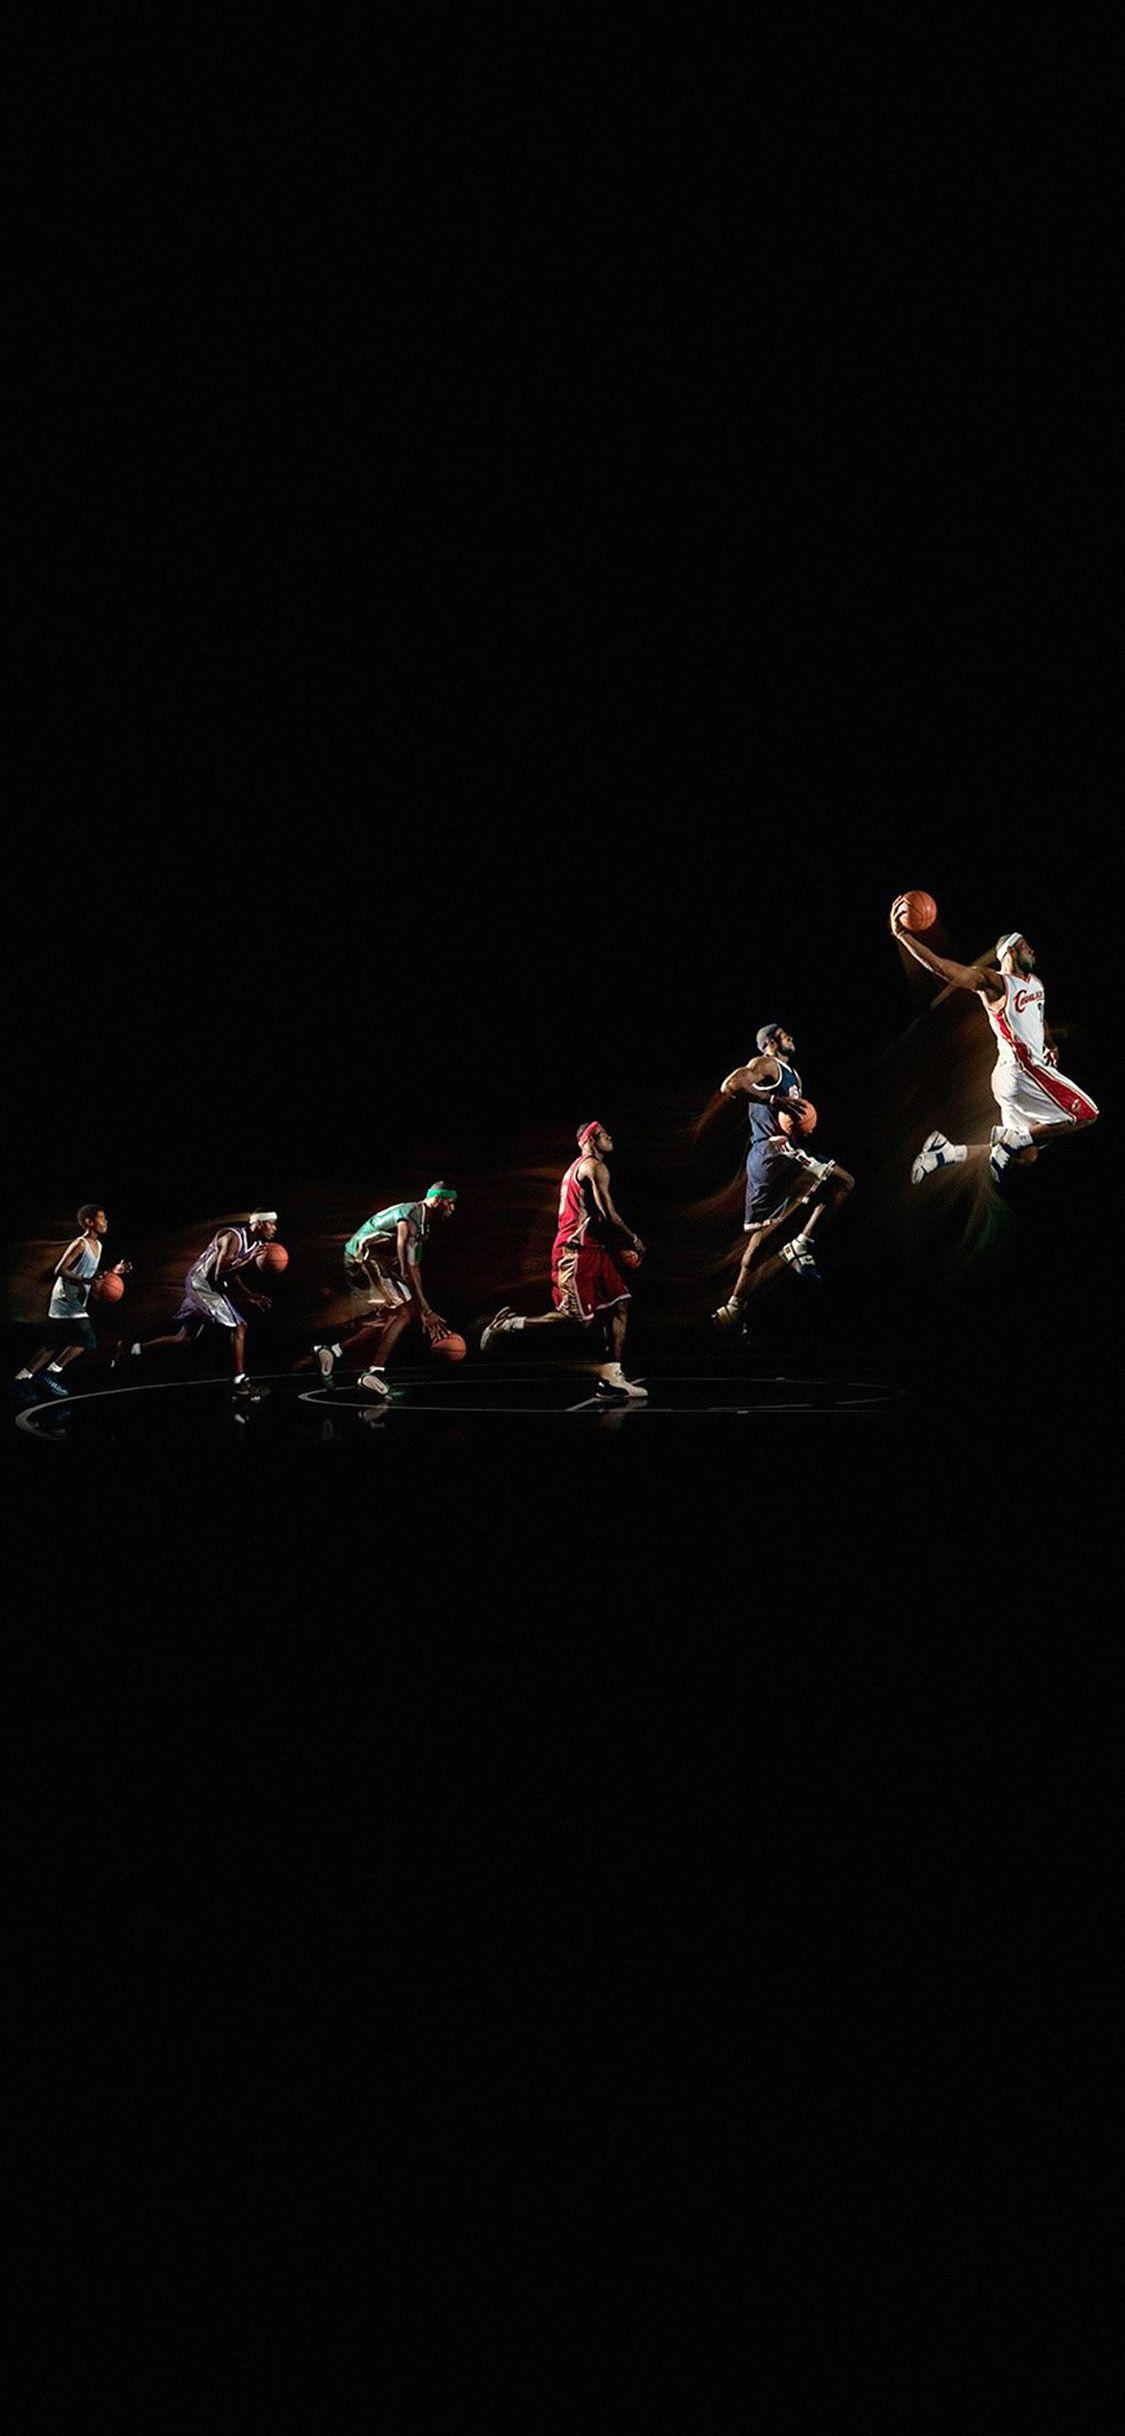 James NBA Basketball iPhone 8 Wallpaper. HD iPhone8 Wallpaper